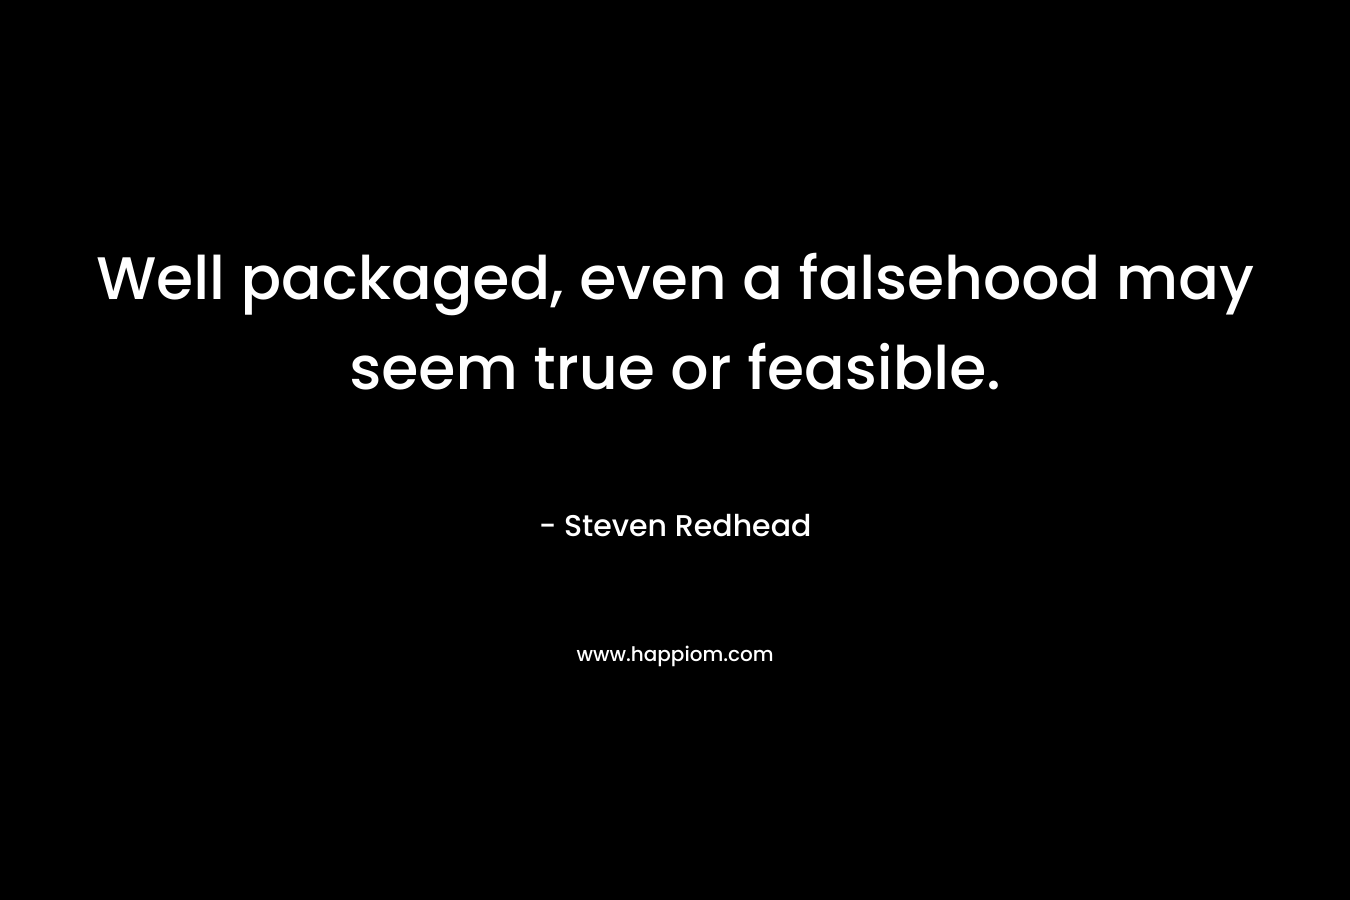 Well packaged, even a falsehood may seem true or feasible. – Steven Redhead